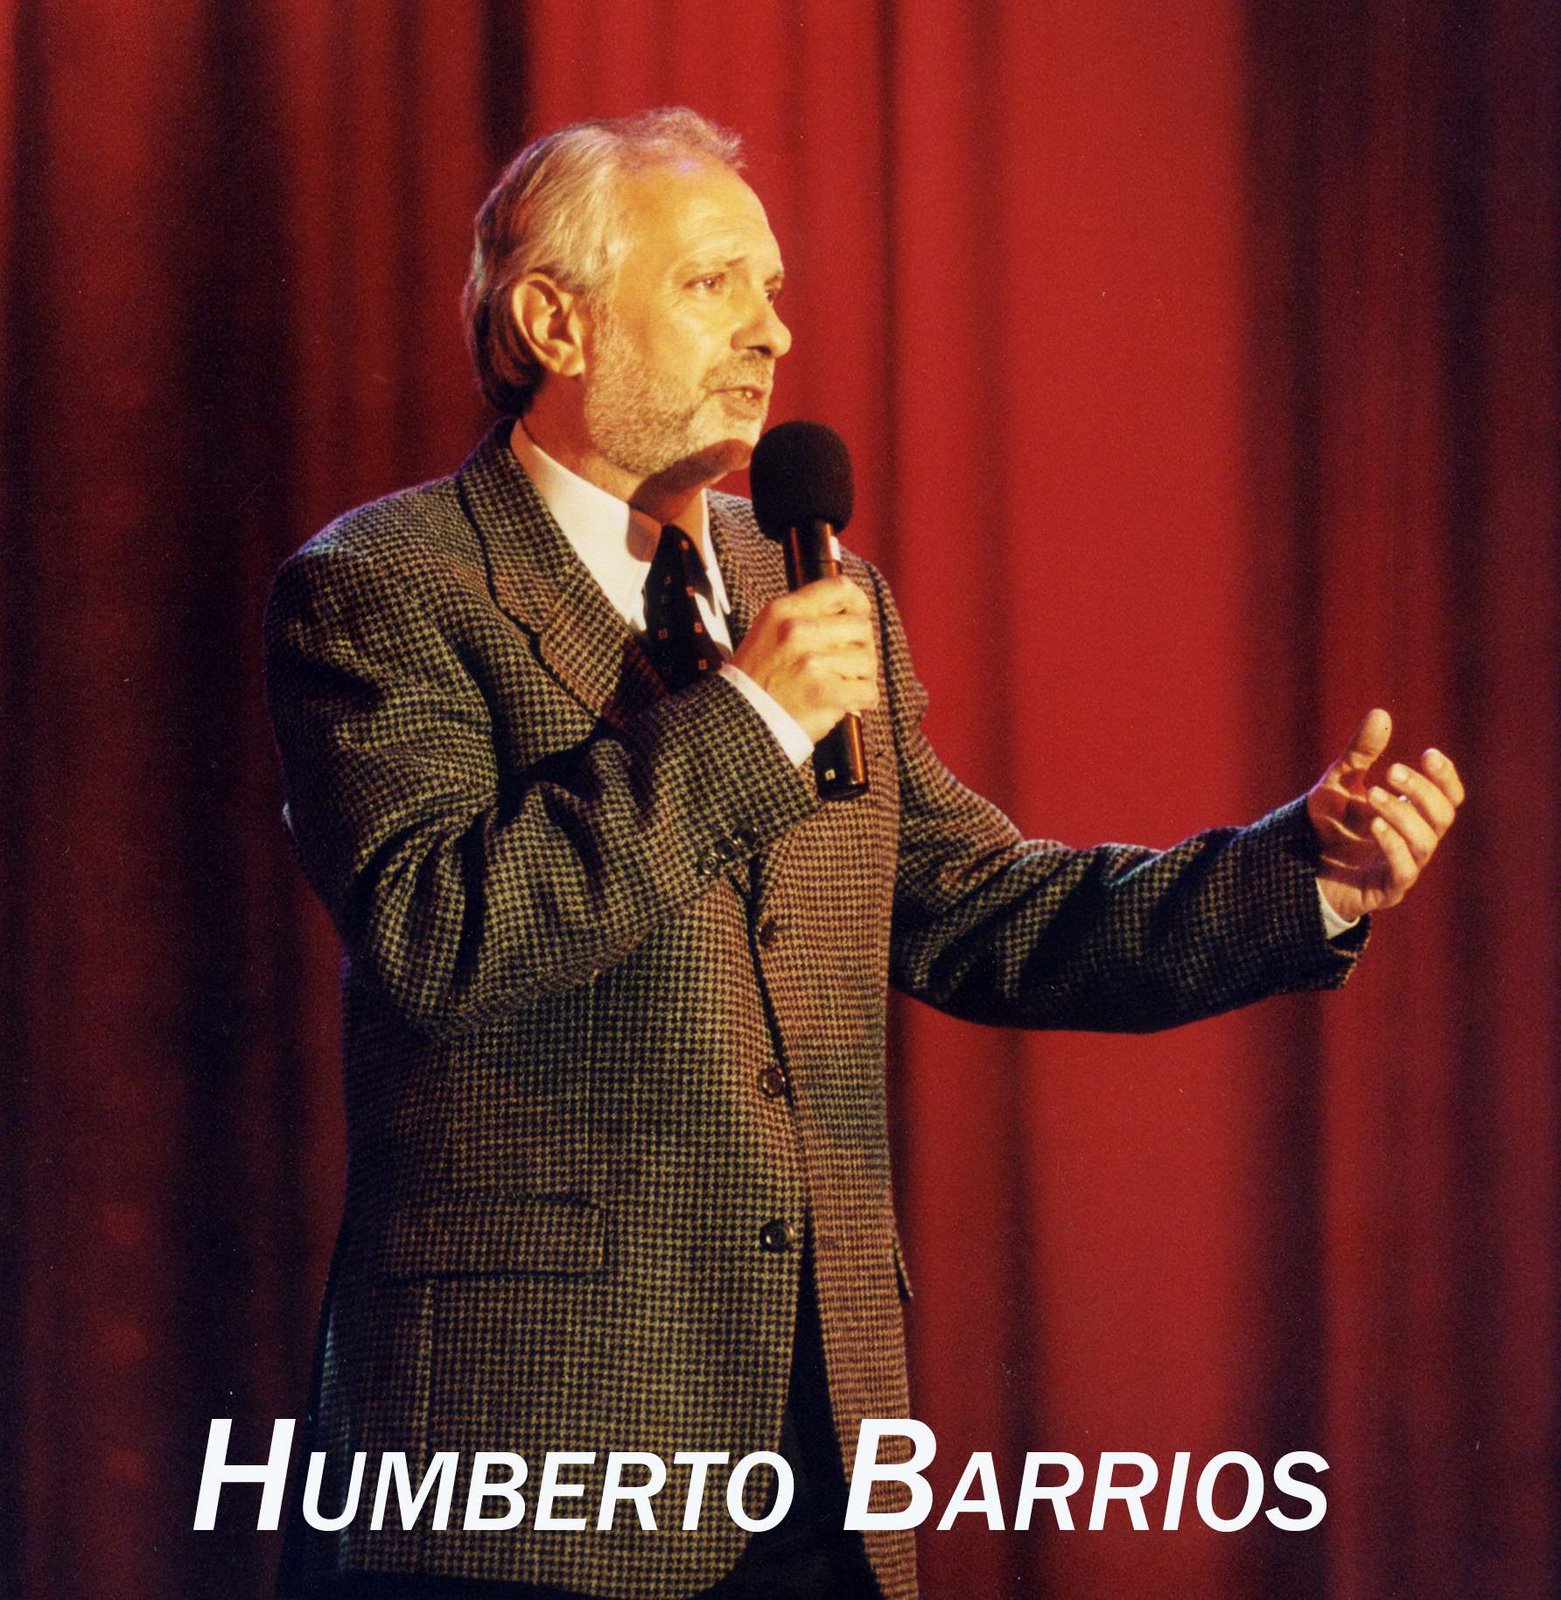 HUMBERTO BARRIOS -CANTANTE -SWOH MUSICAL - EVENTOS